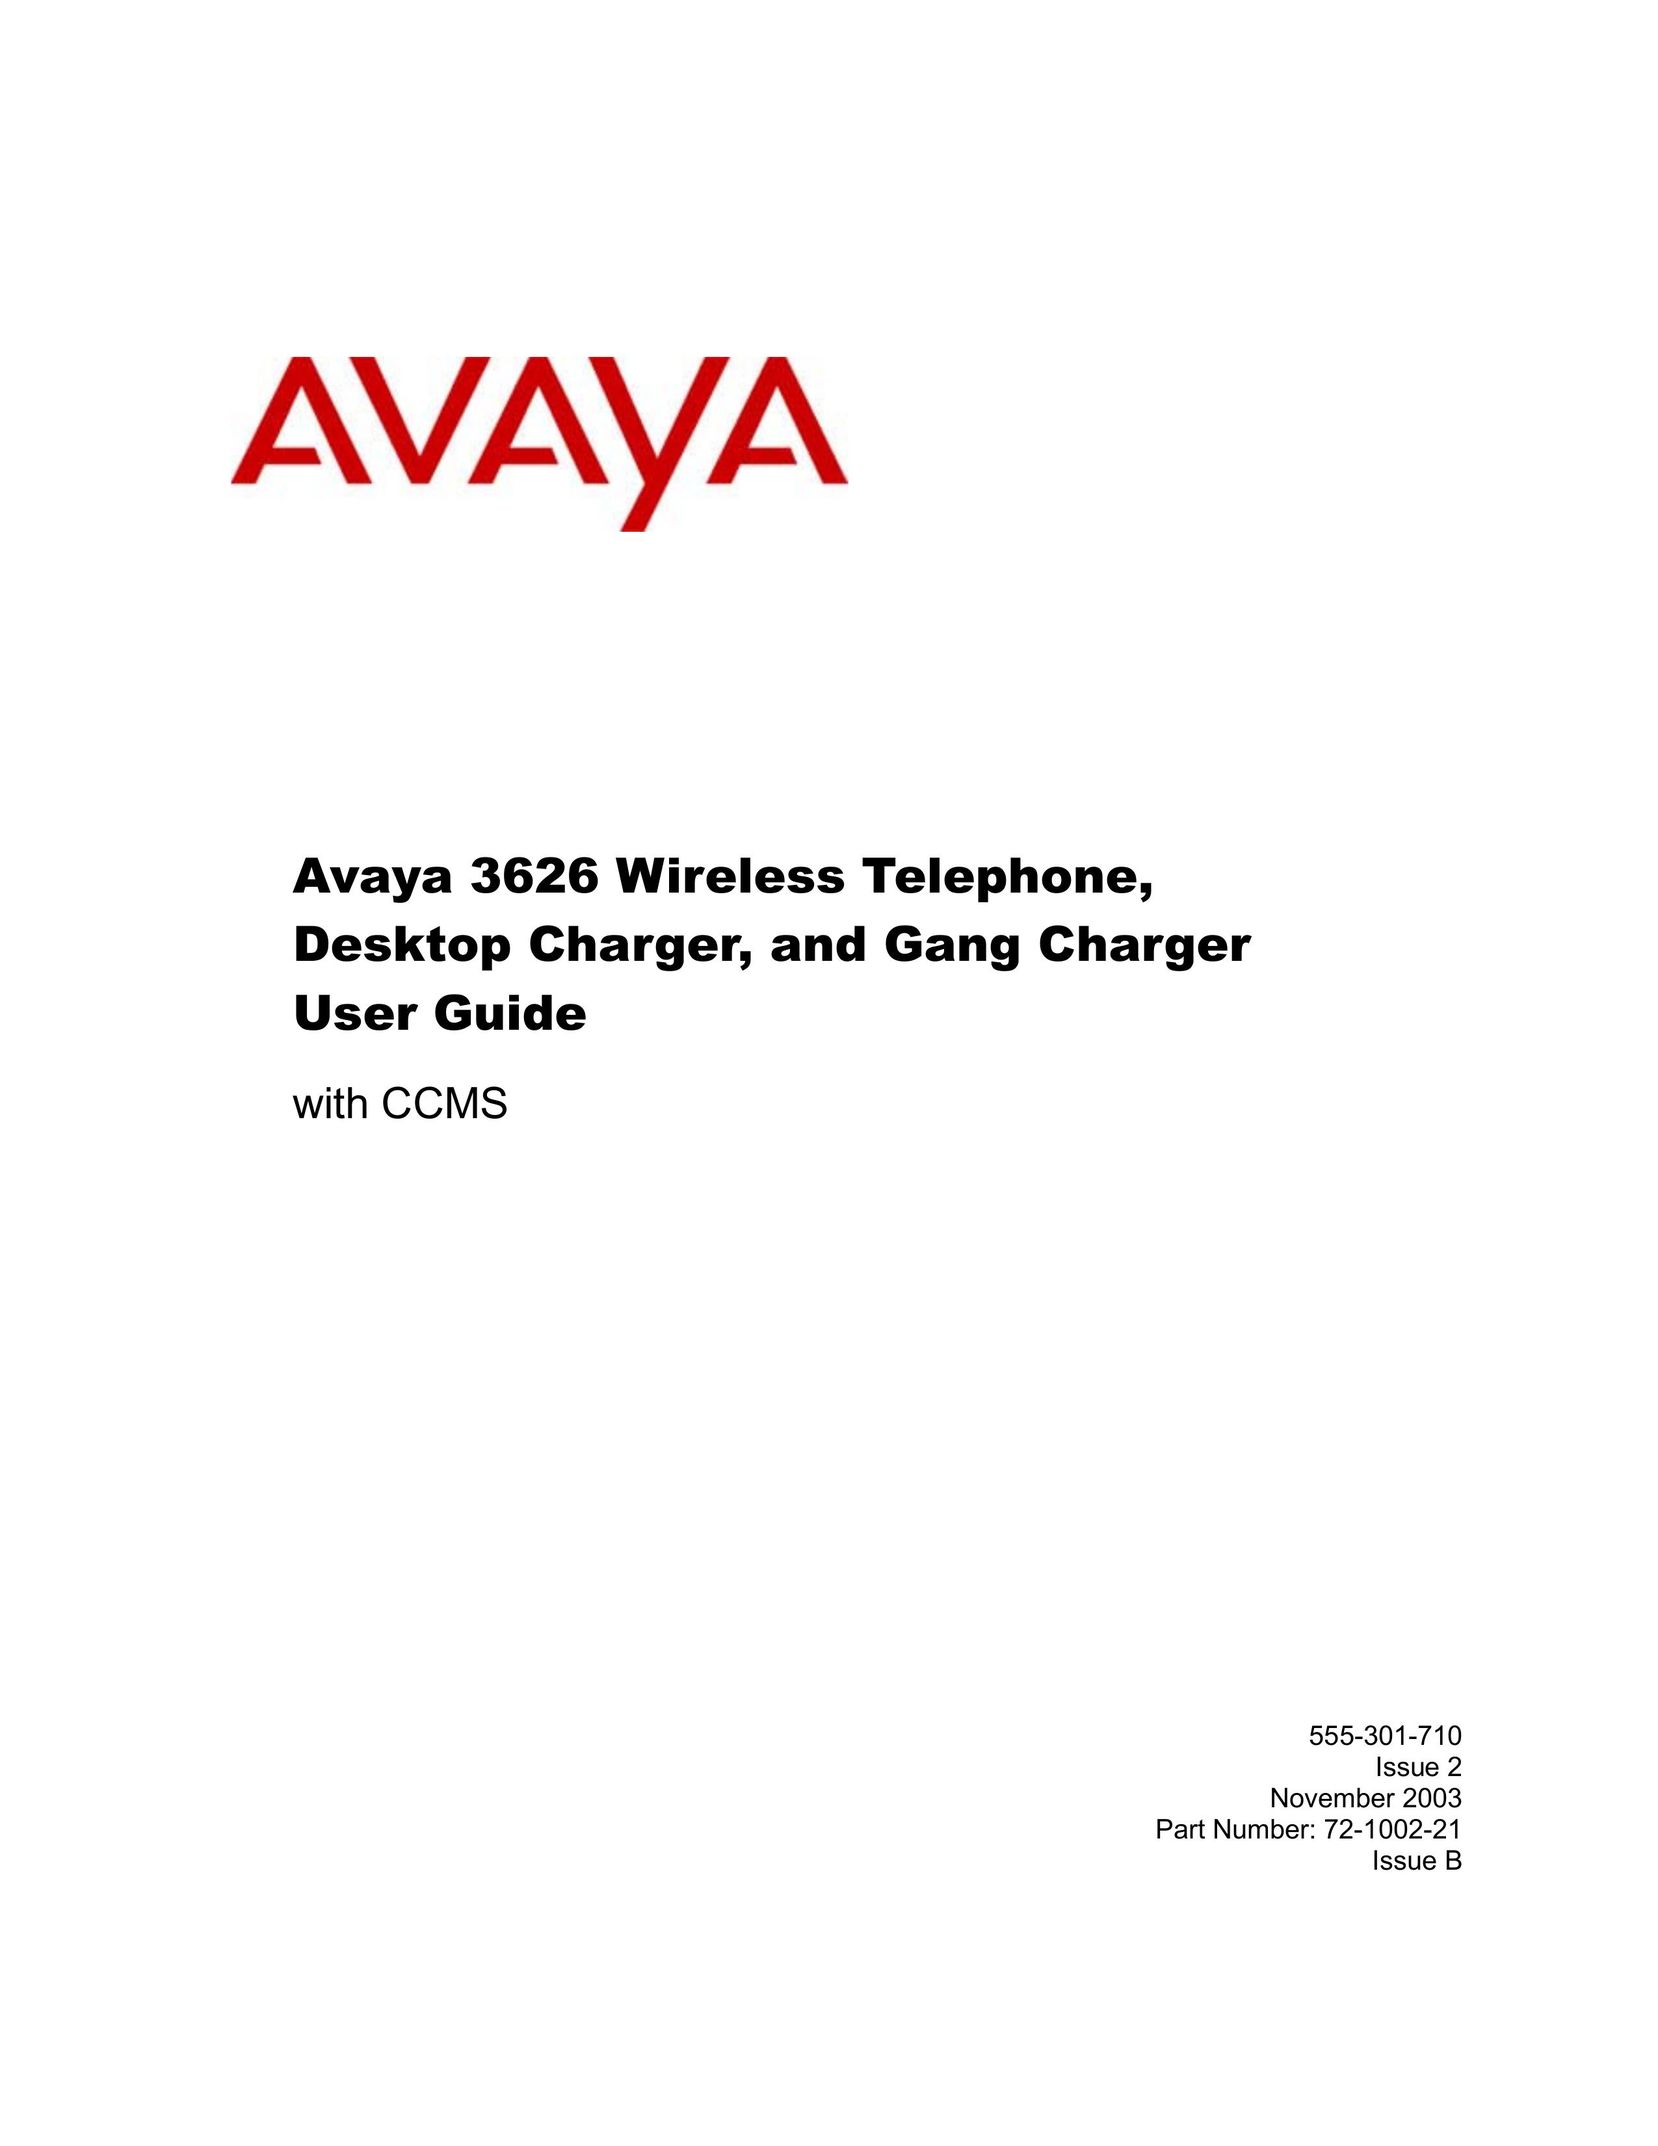 Avaya Desktop Charger Cordless Telephone User Manual